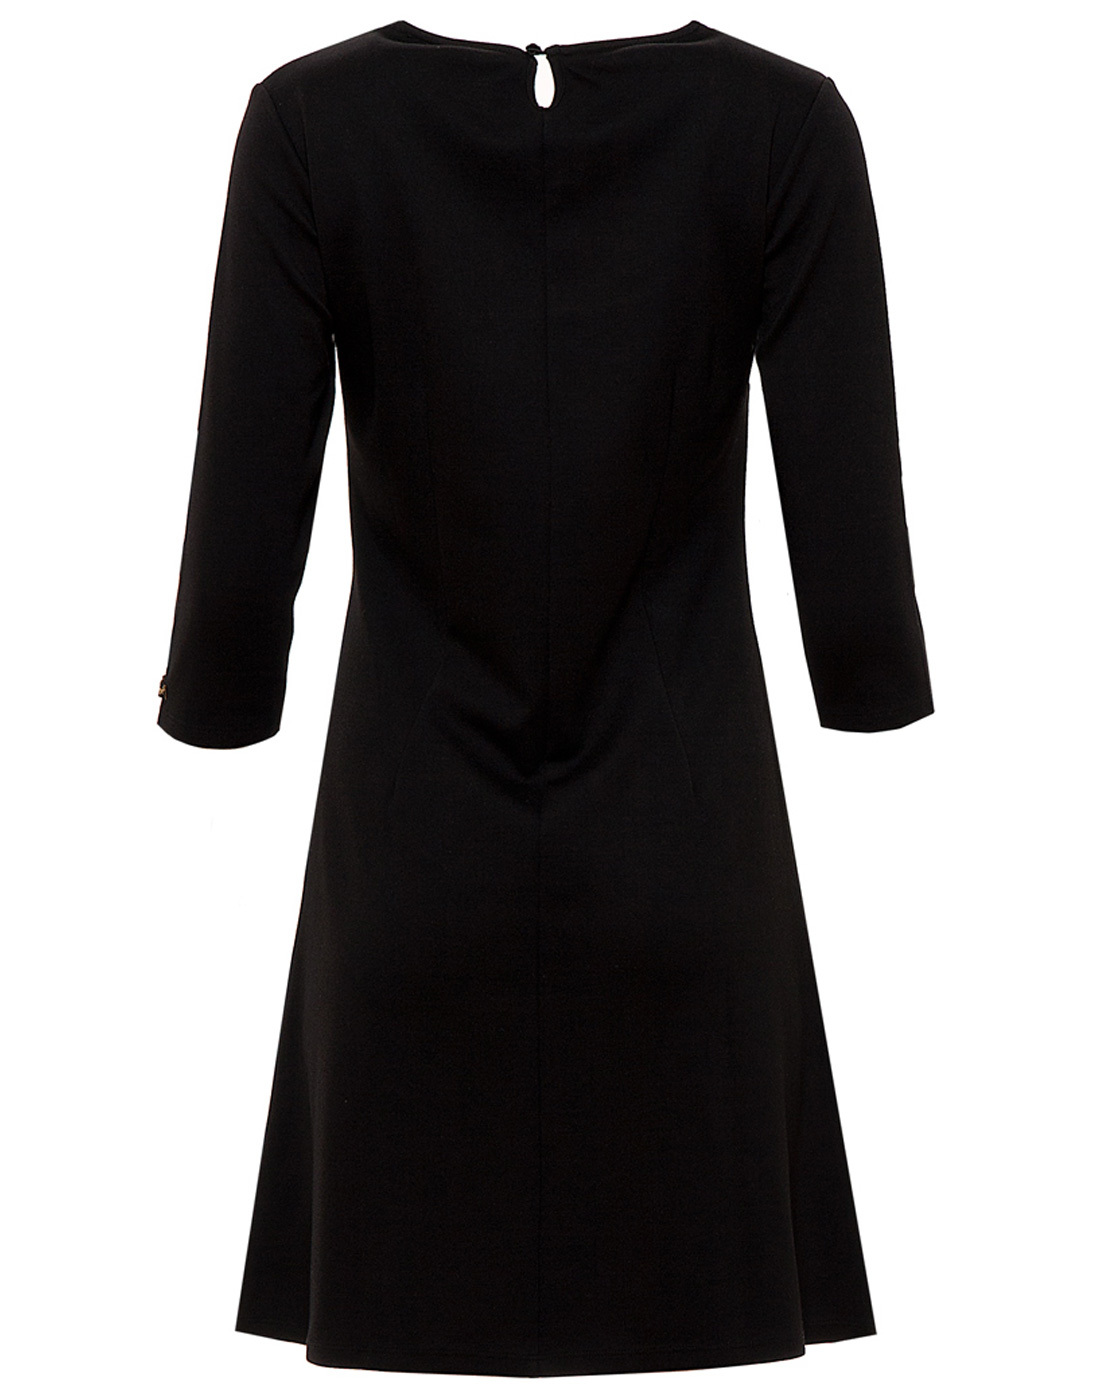 MADEMOISELLE YEYE Molary Retro Mod 1960s Dress in Black